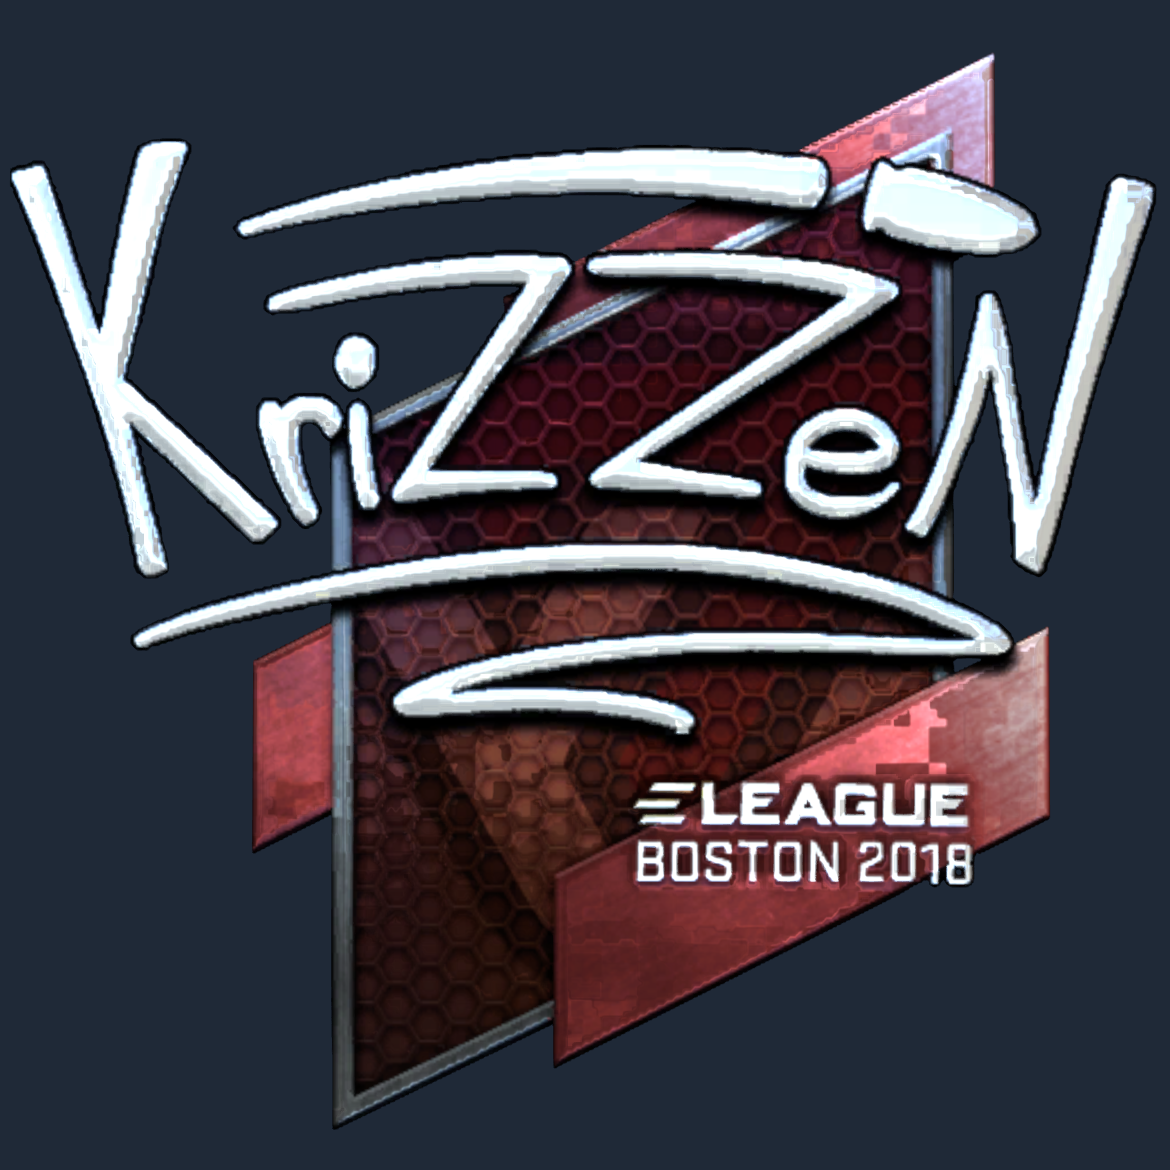 Sticker | KrizzeN (Foil) | Boston 2018 Screenshot